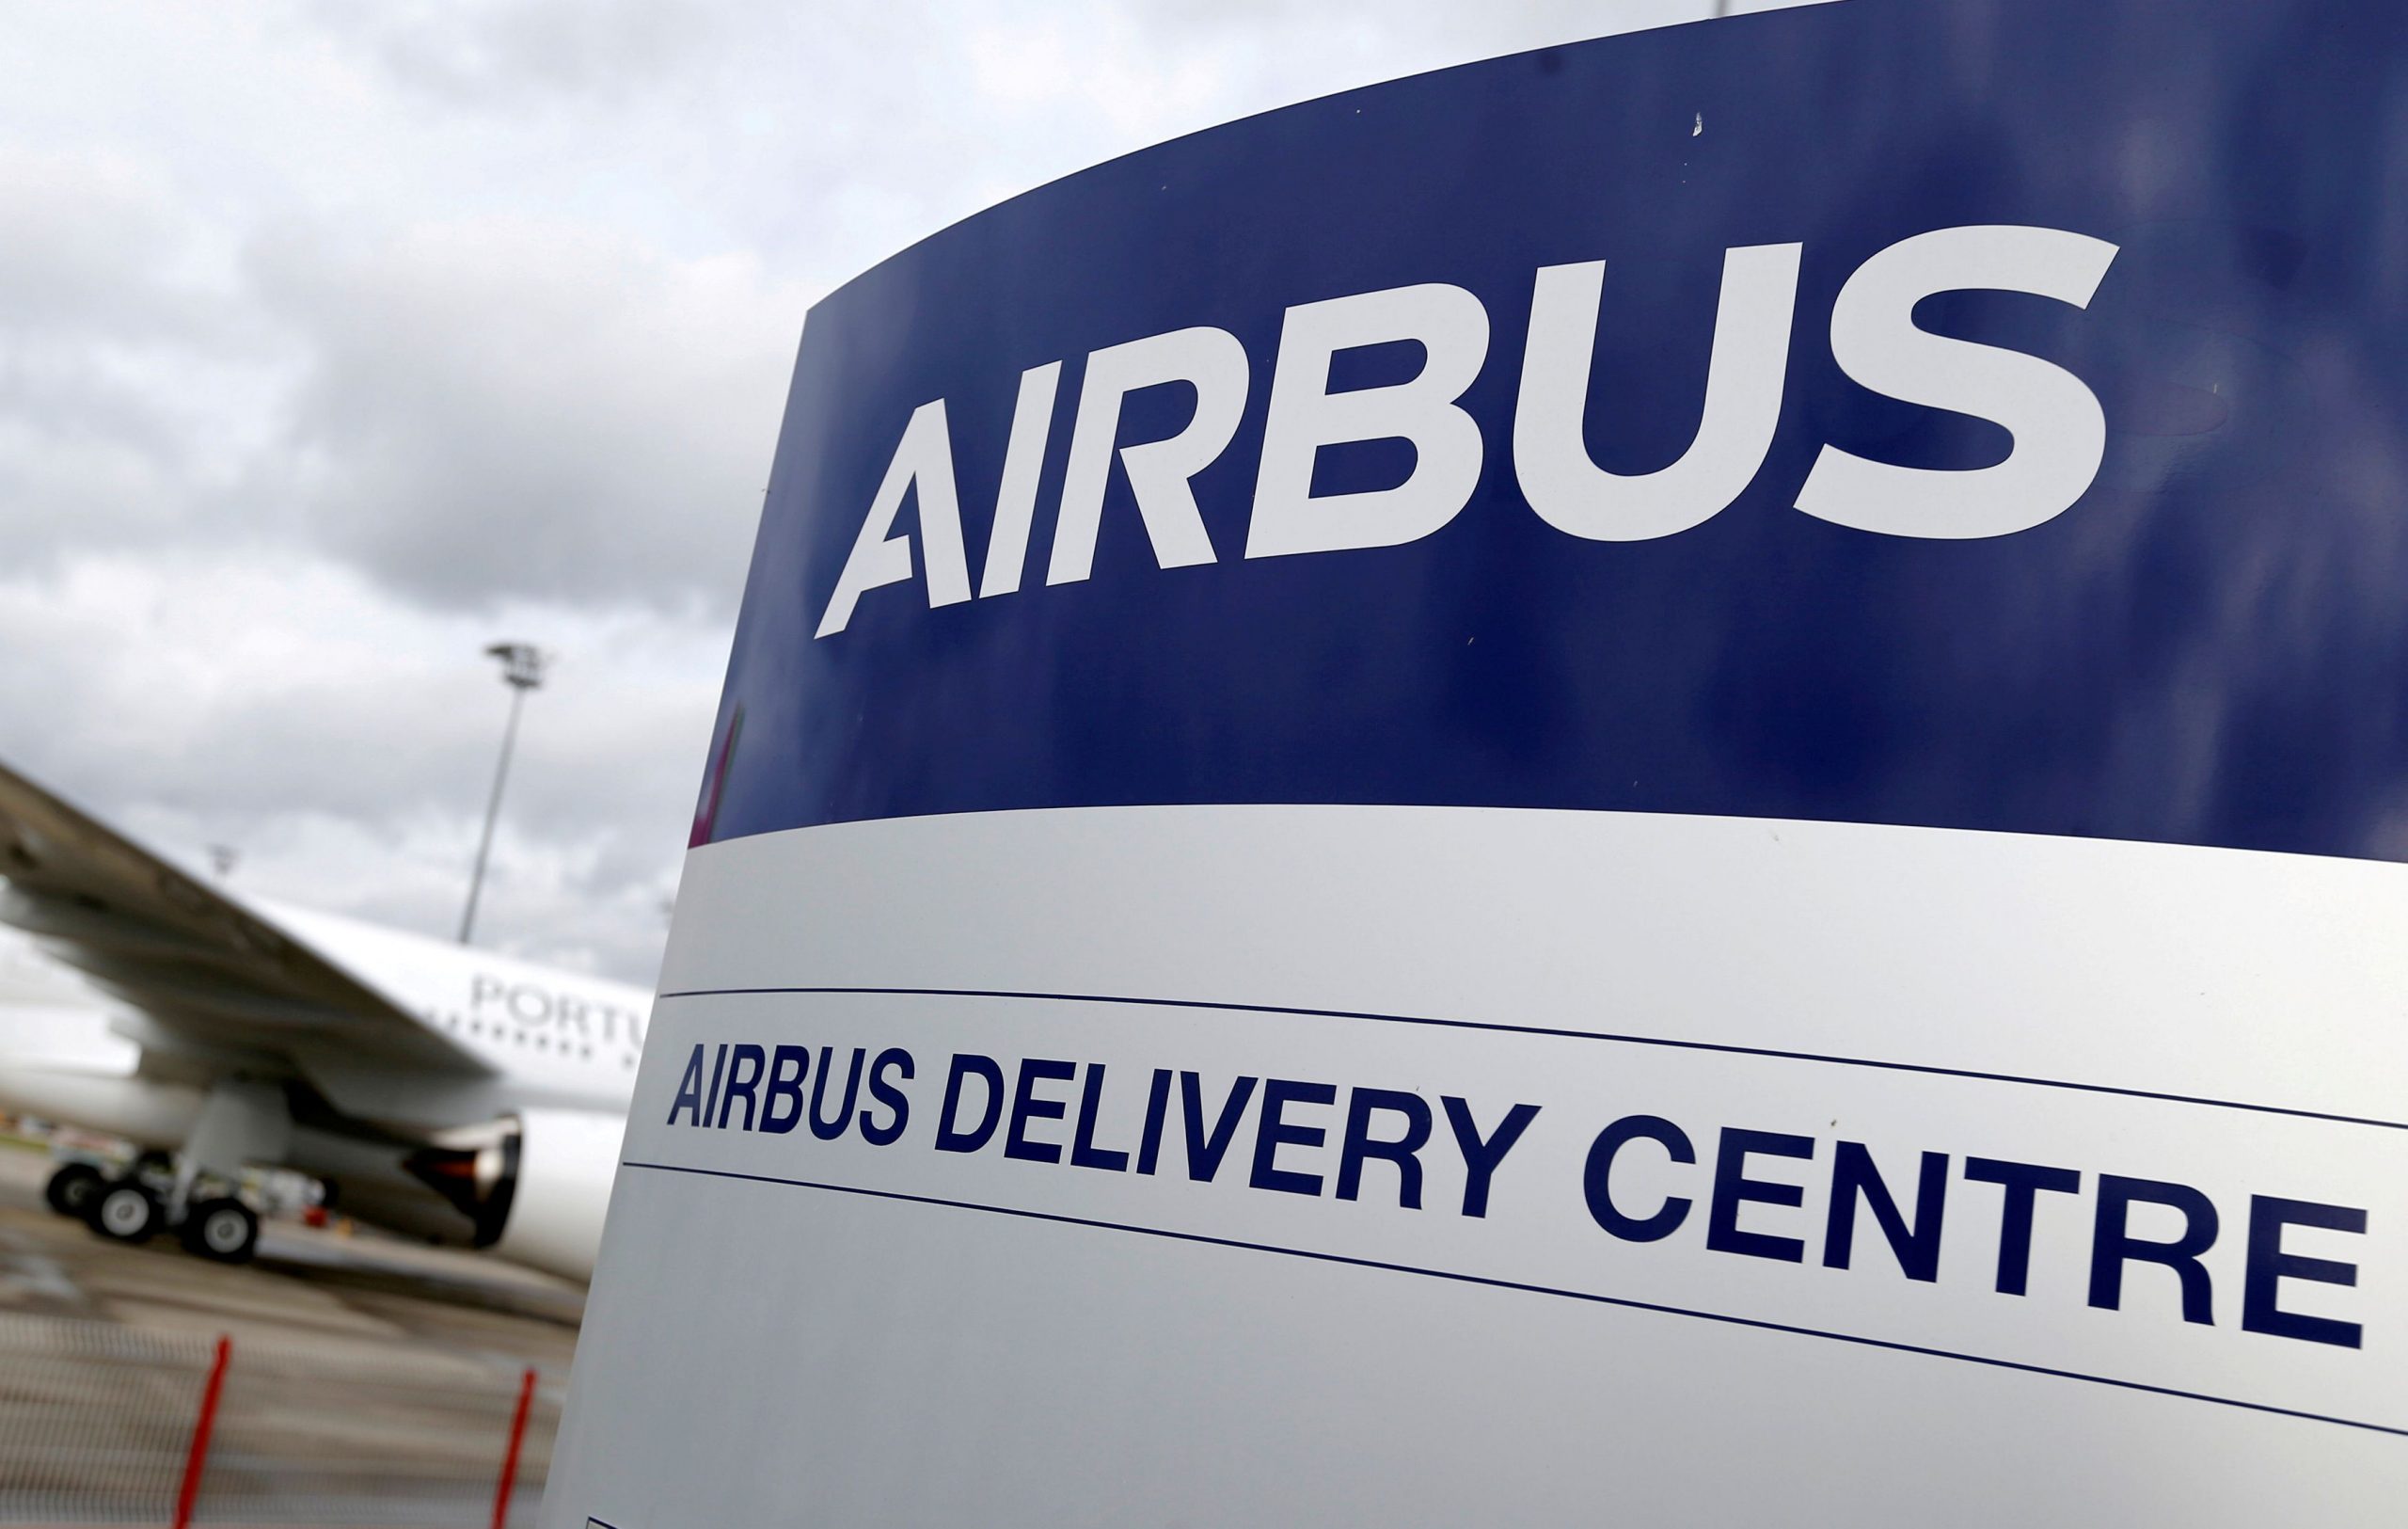 Airbus: Στα σκαριά mega – deal παραγγελίας 500 αεροσκαφών από την ινδική IndiGo